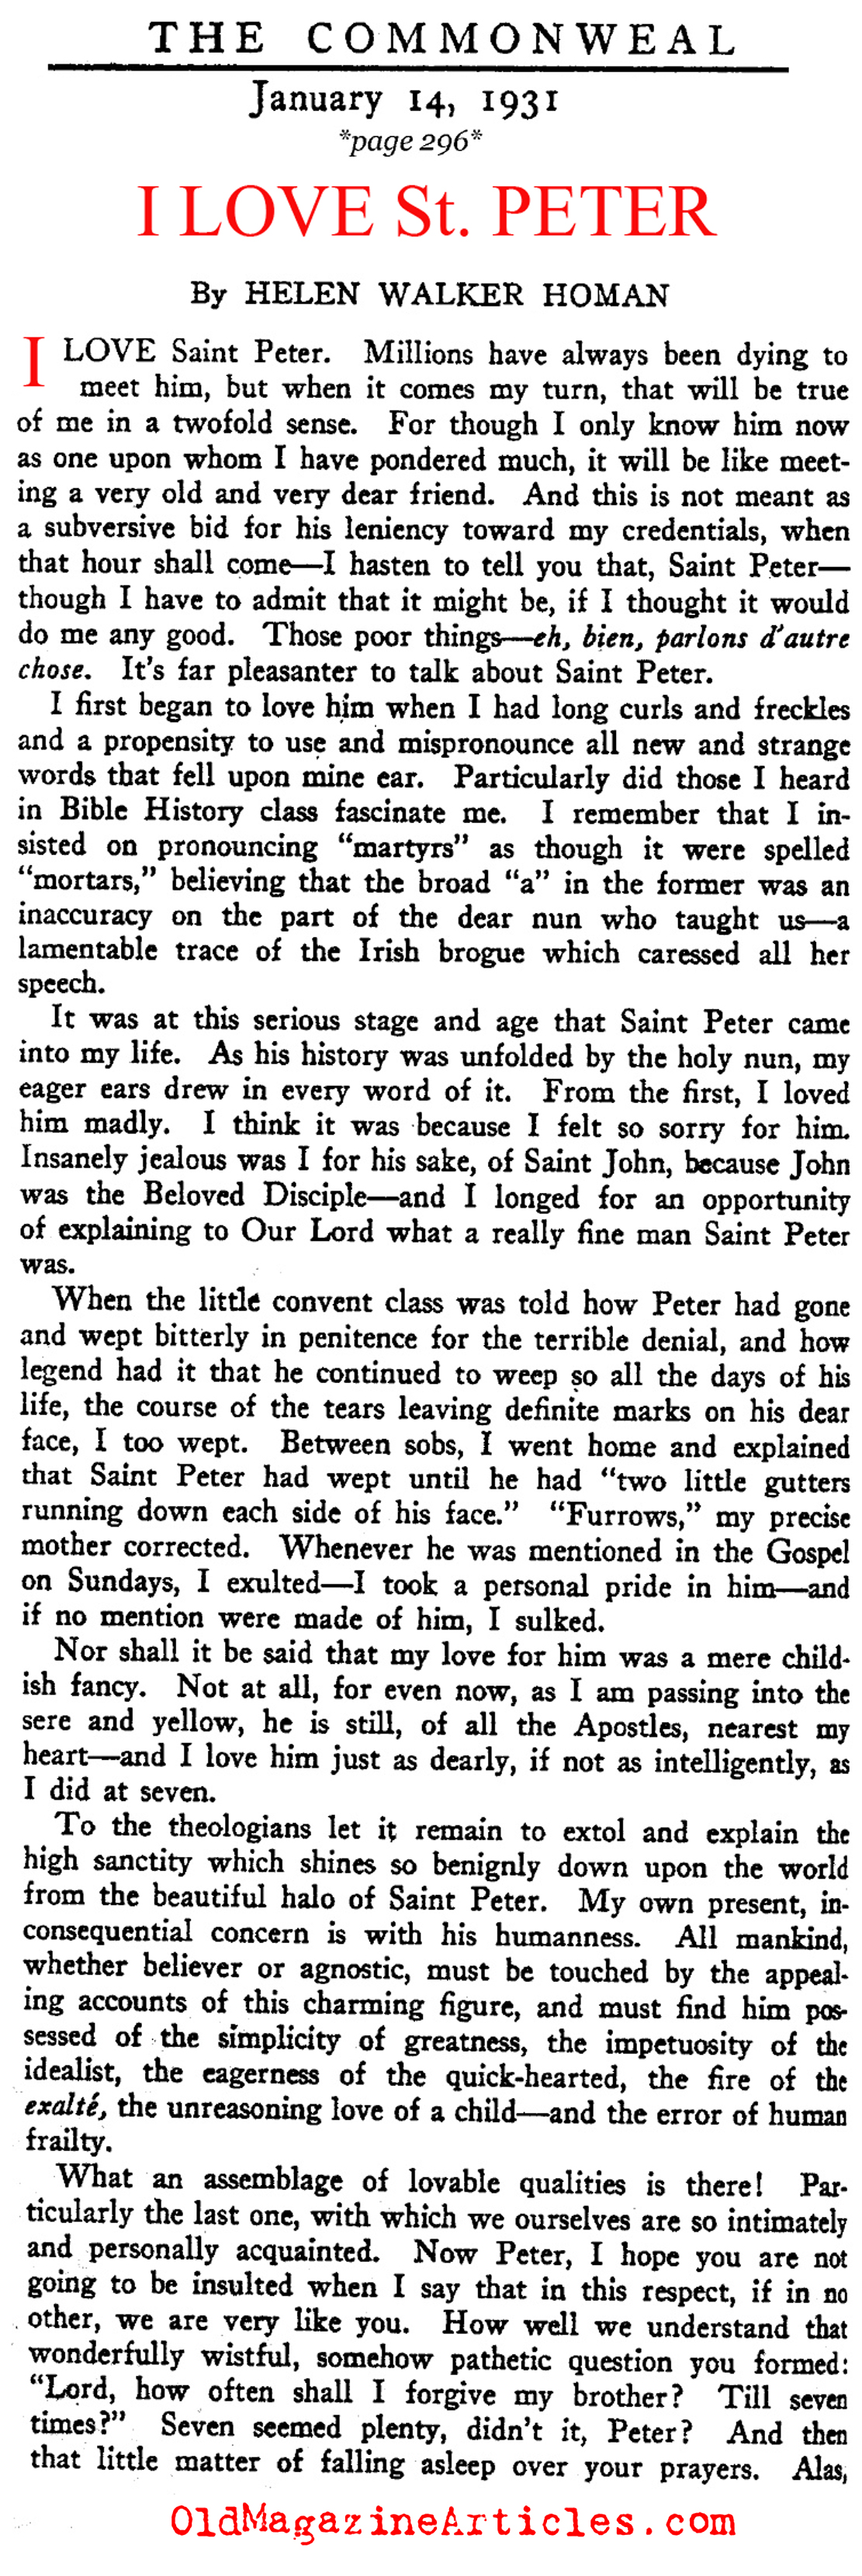 Saint Peter: An Appreciation (Commonweal, 1931)